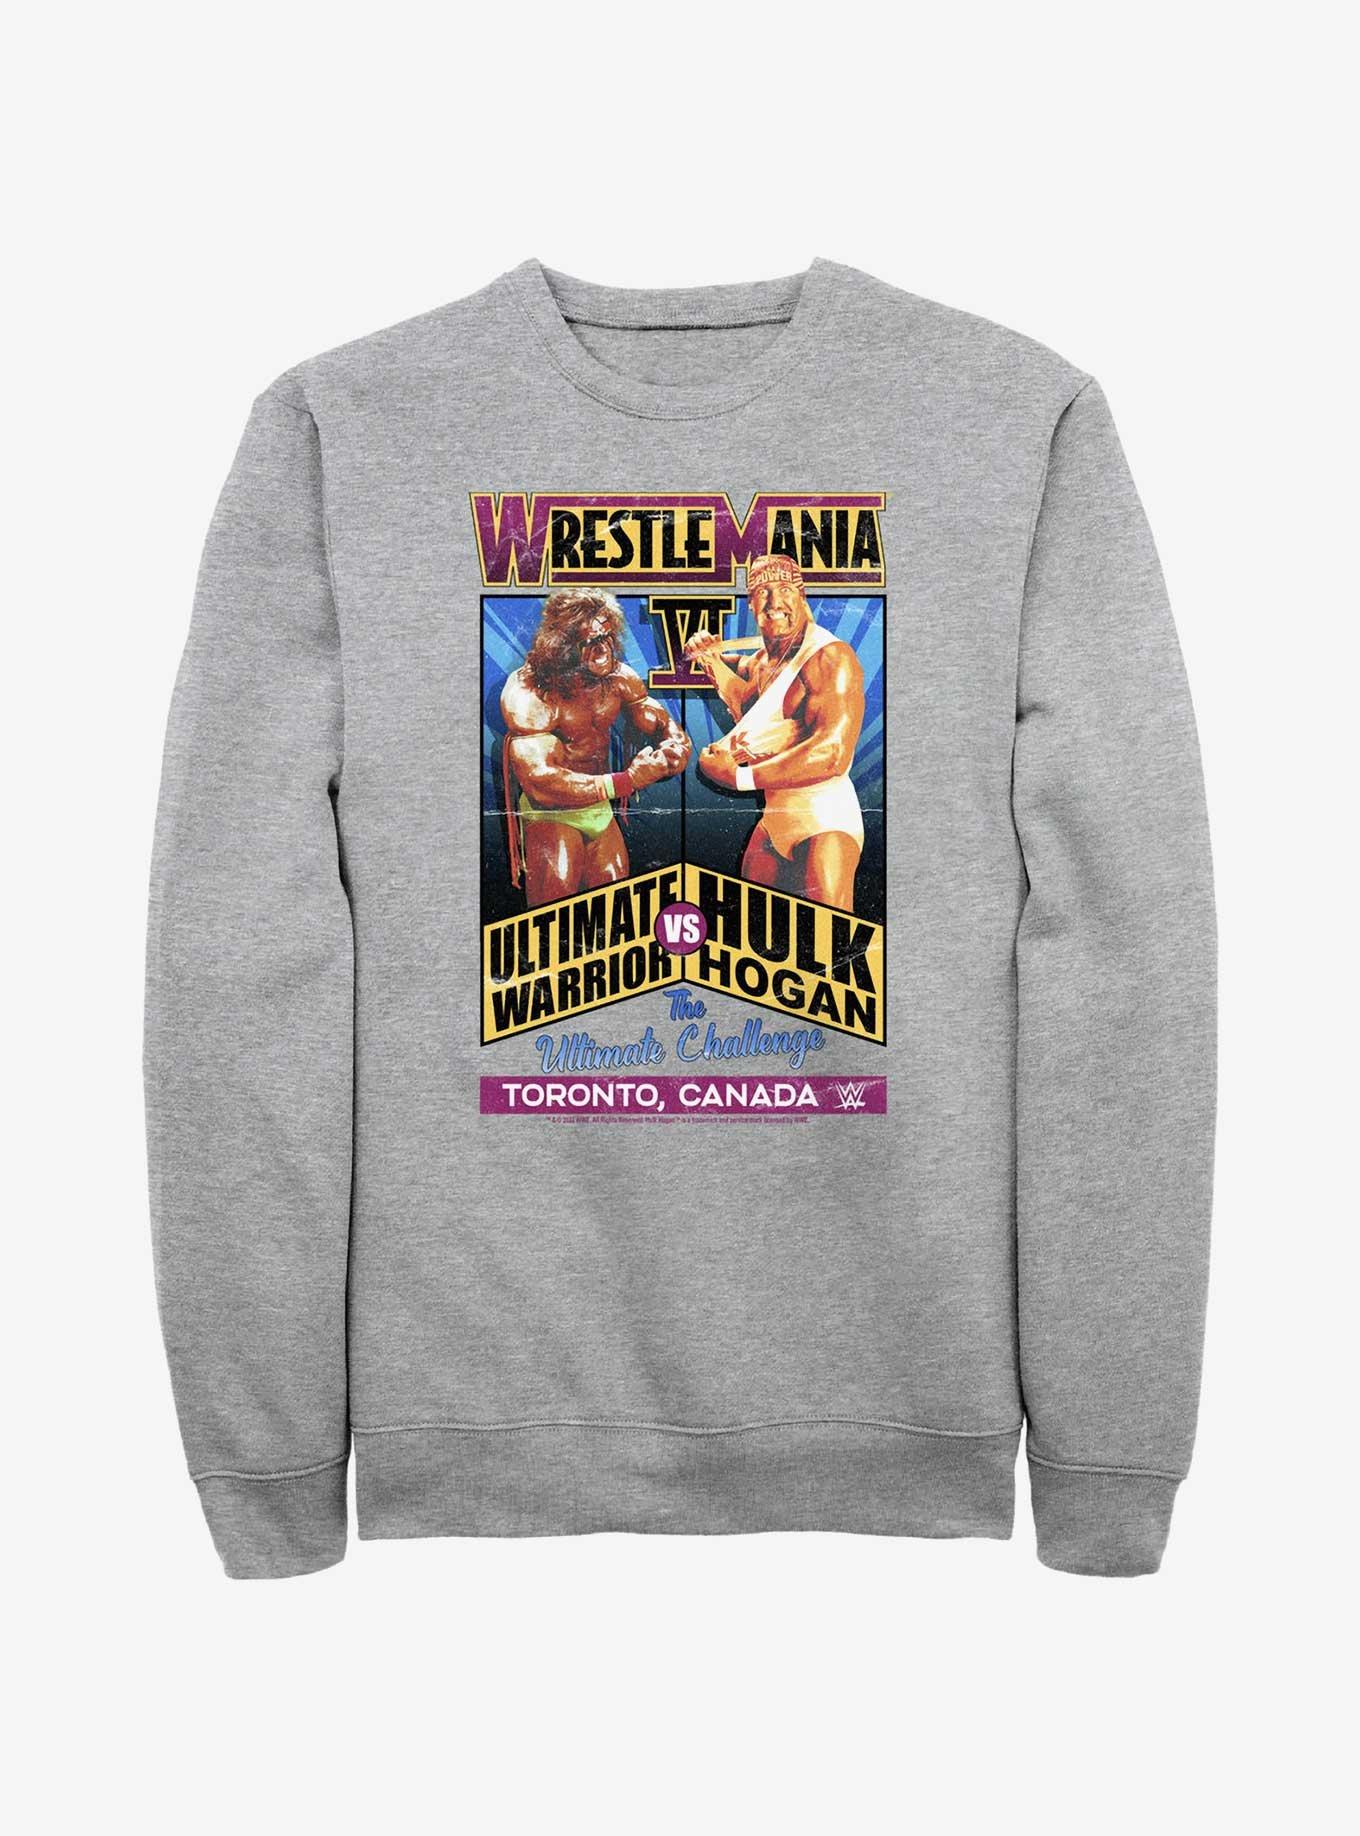 WWE Wrestlemania VI Ultimate Warrior Vs Hulk Hogan Sweatshirt